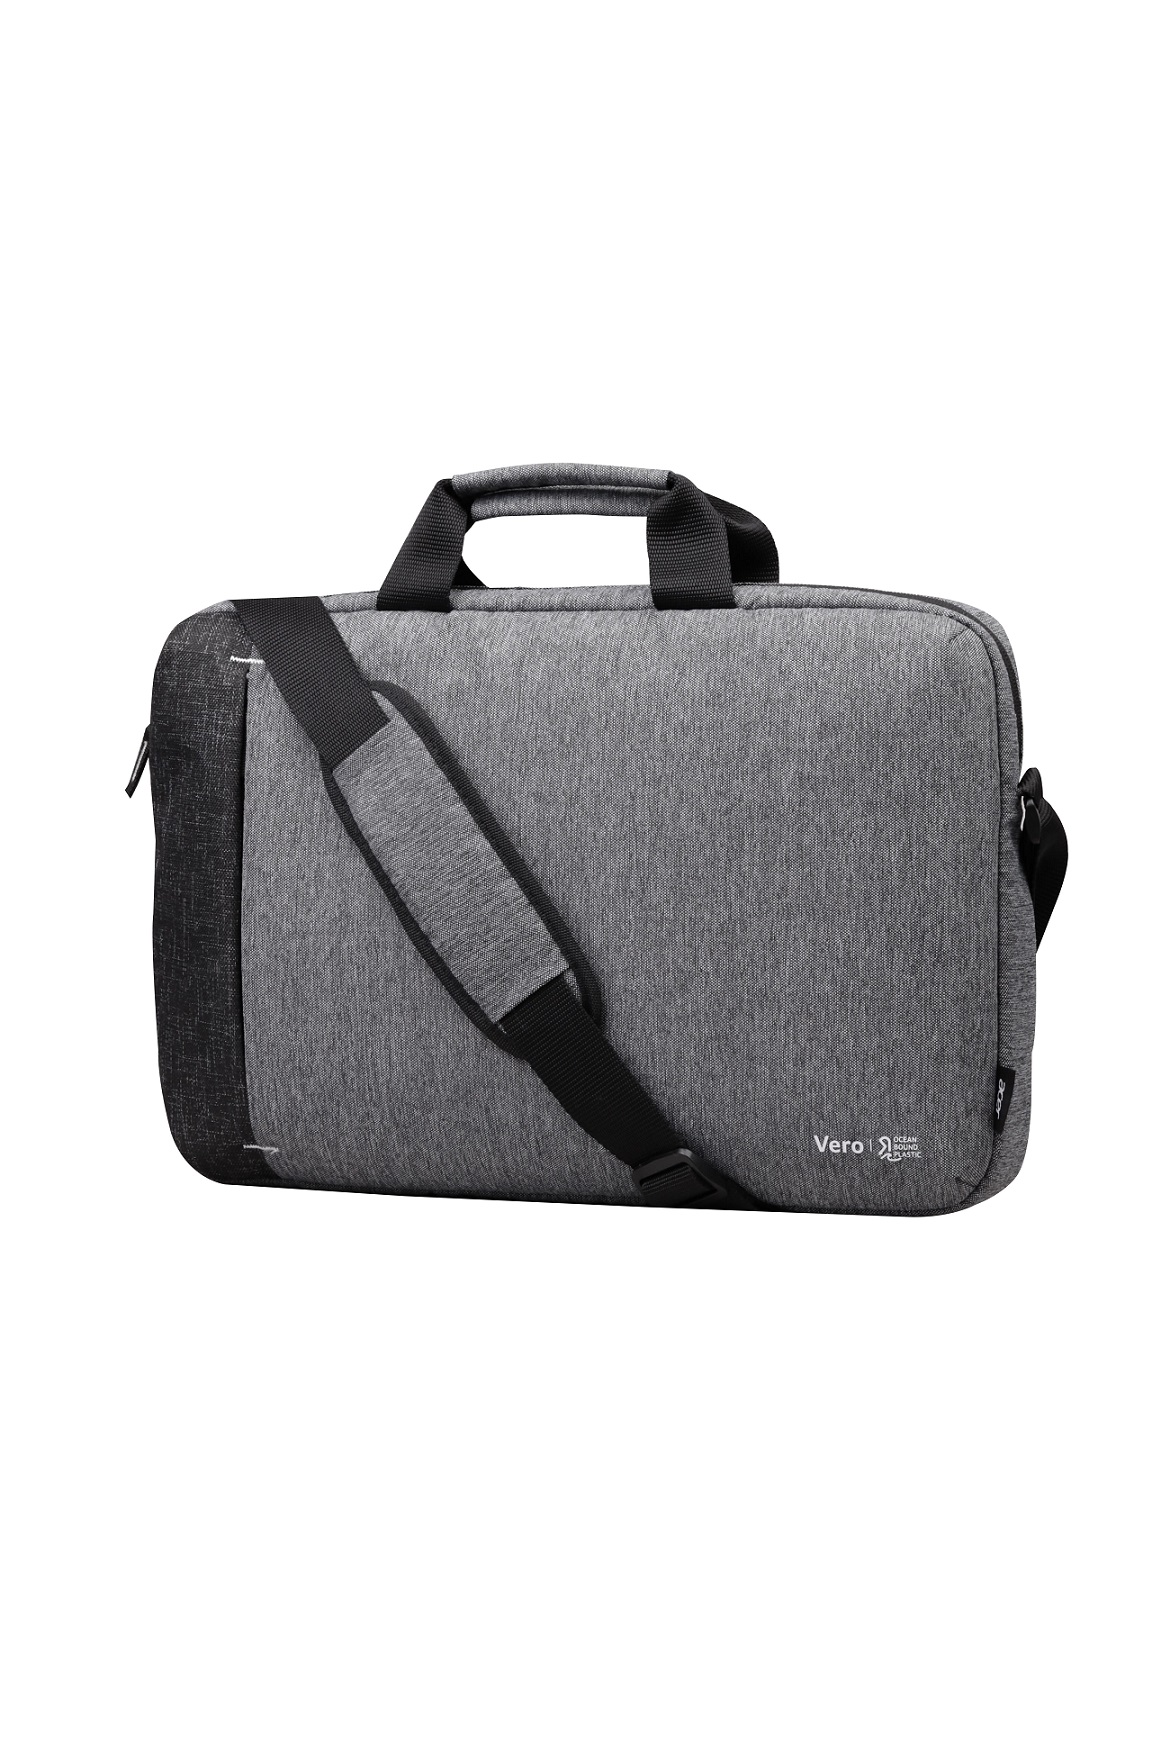 Obrázek Acer Vero OBP carrying bag, Retail pack